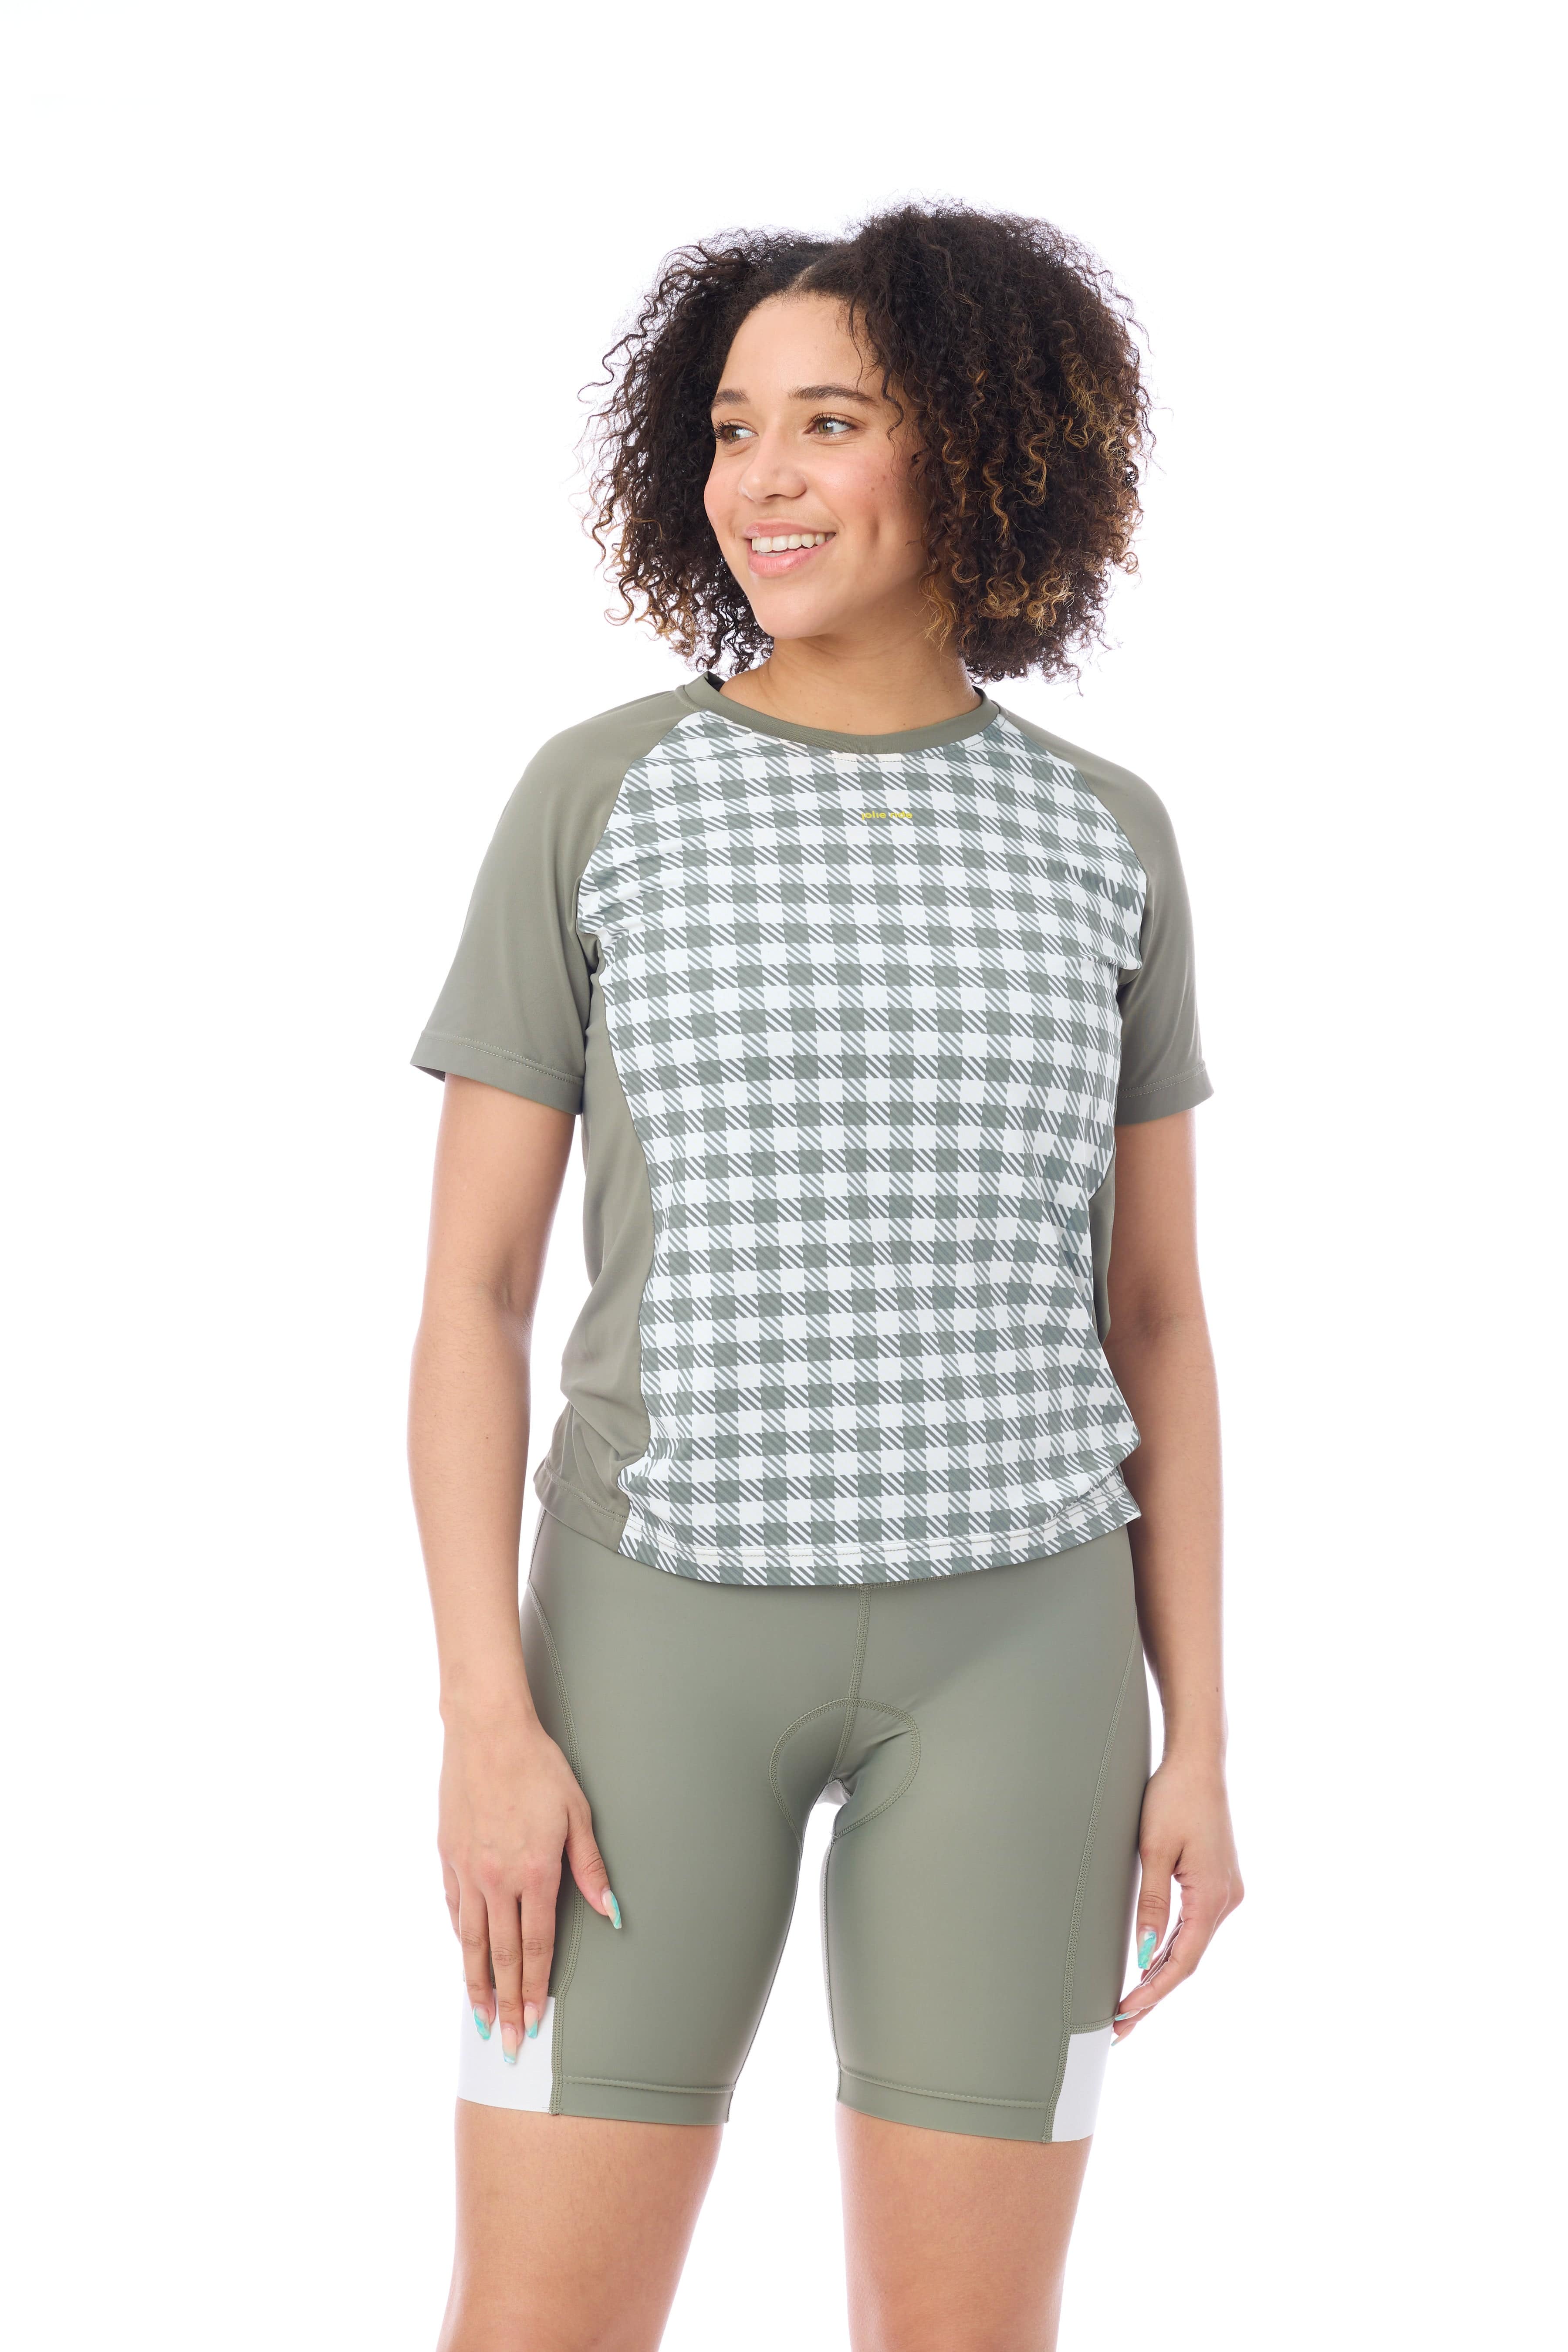 JolieRide T-Shirt mtb short sleeve jersey with moisture-wicking & odor-neutralizing fabric